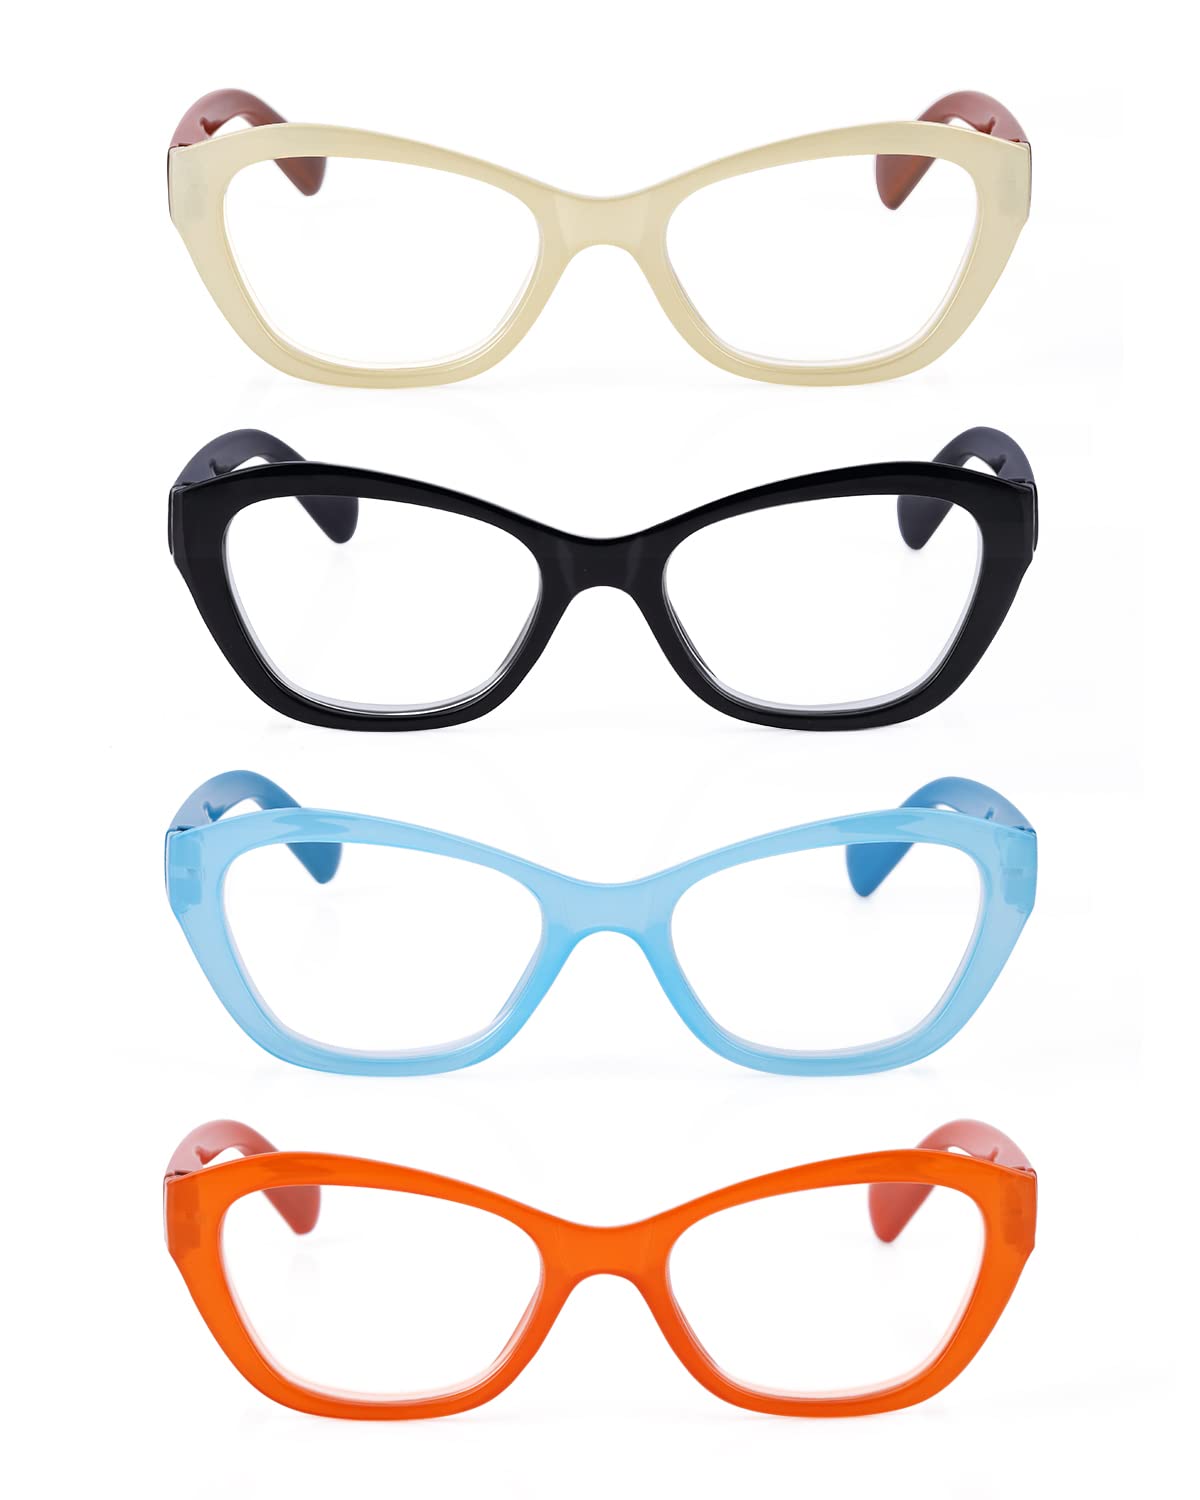 LUFF 4Pack Reading Glasses Blue Light Blocking - for Women Men HD Readers, Spring Hinge Comfort Computer Eyeglasses